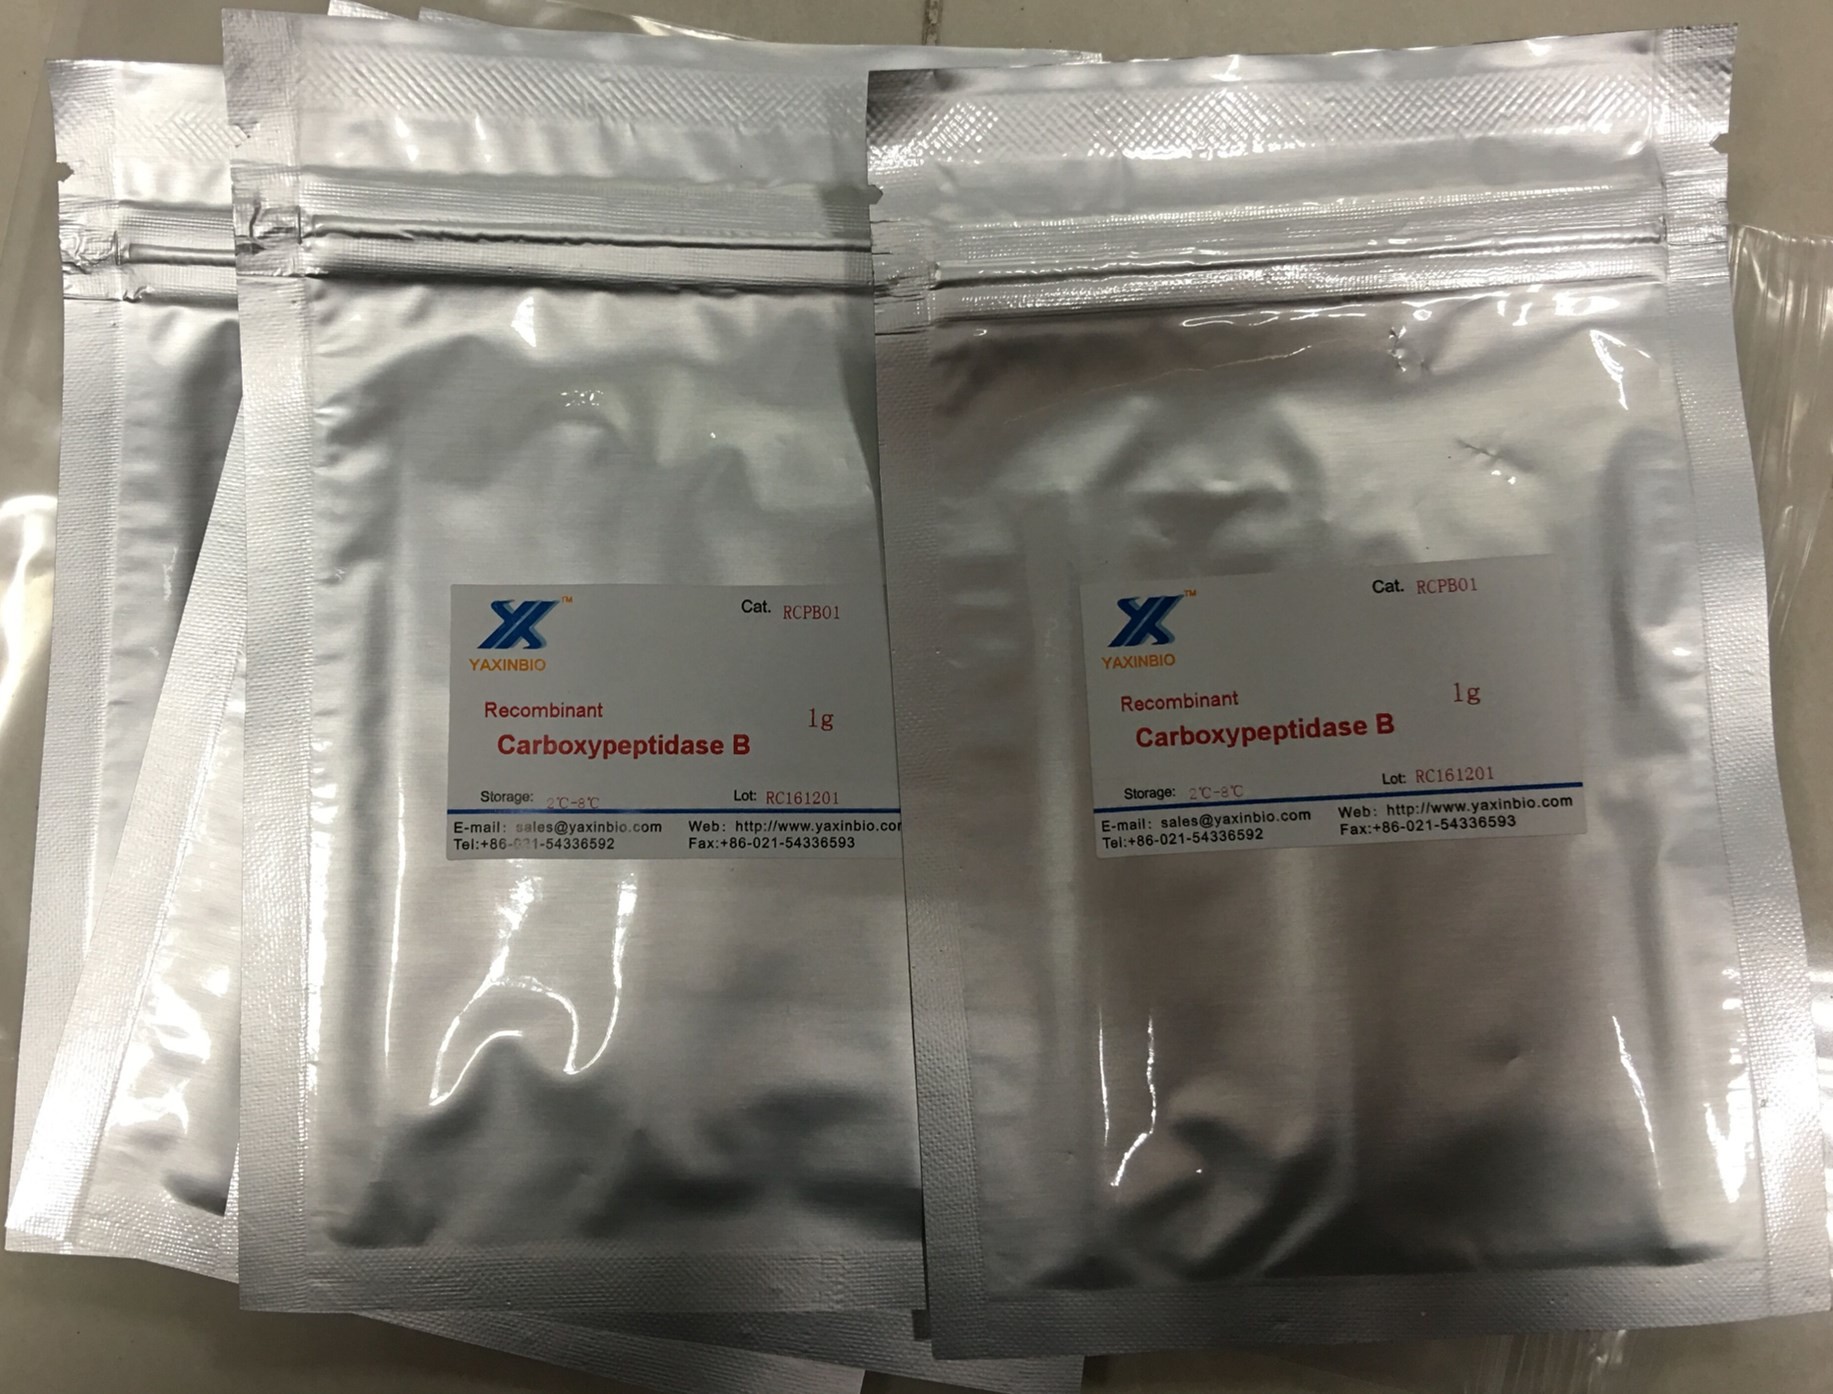 China Recombinant Carboxypeptidase B, Specific Activity ≥170 Units/Mg Pro., Lyophilized Powder wholesale